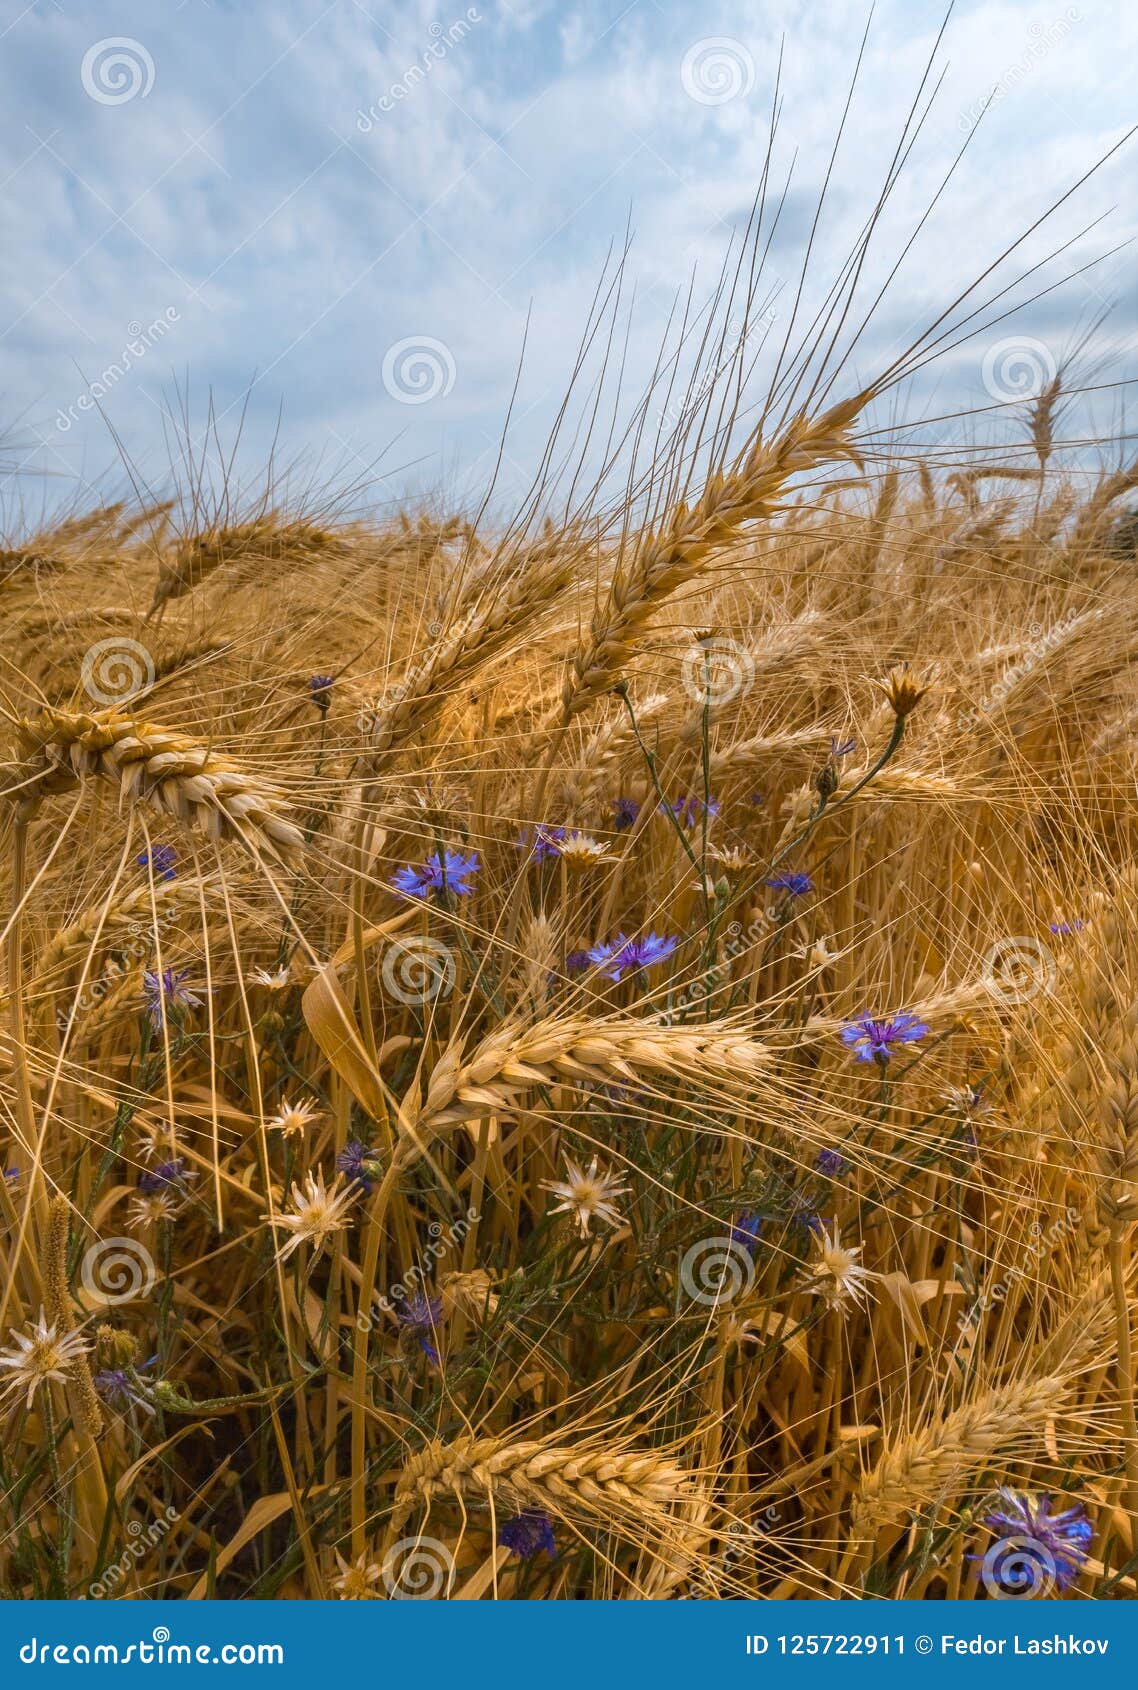 ripe wheat harvest bread ears wheat south russia large species ears large species ears ripe wheat harvest 125722911